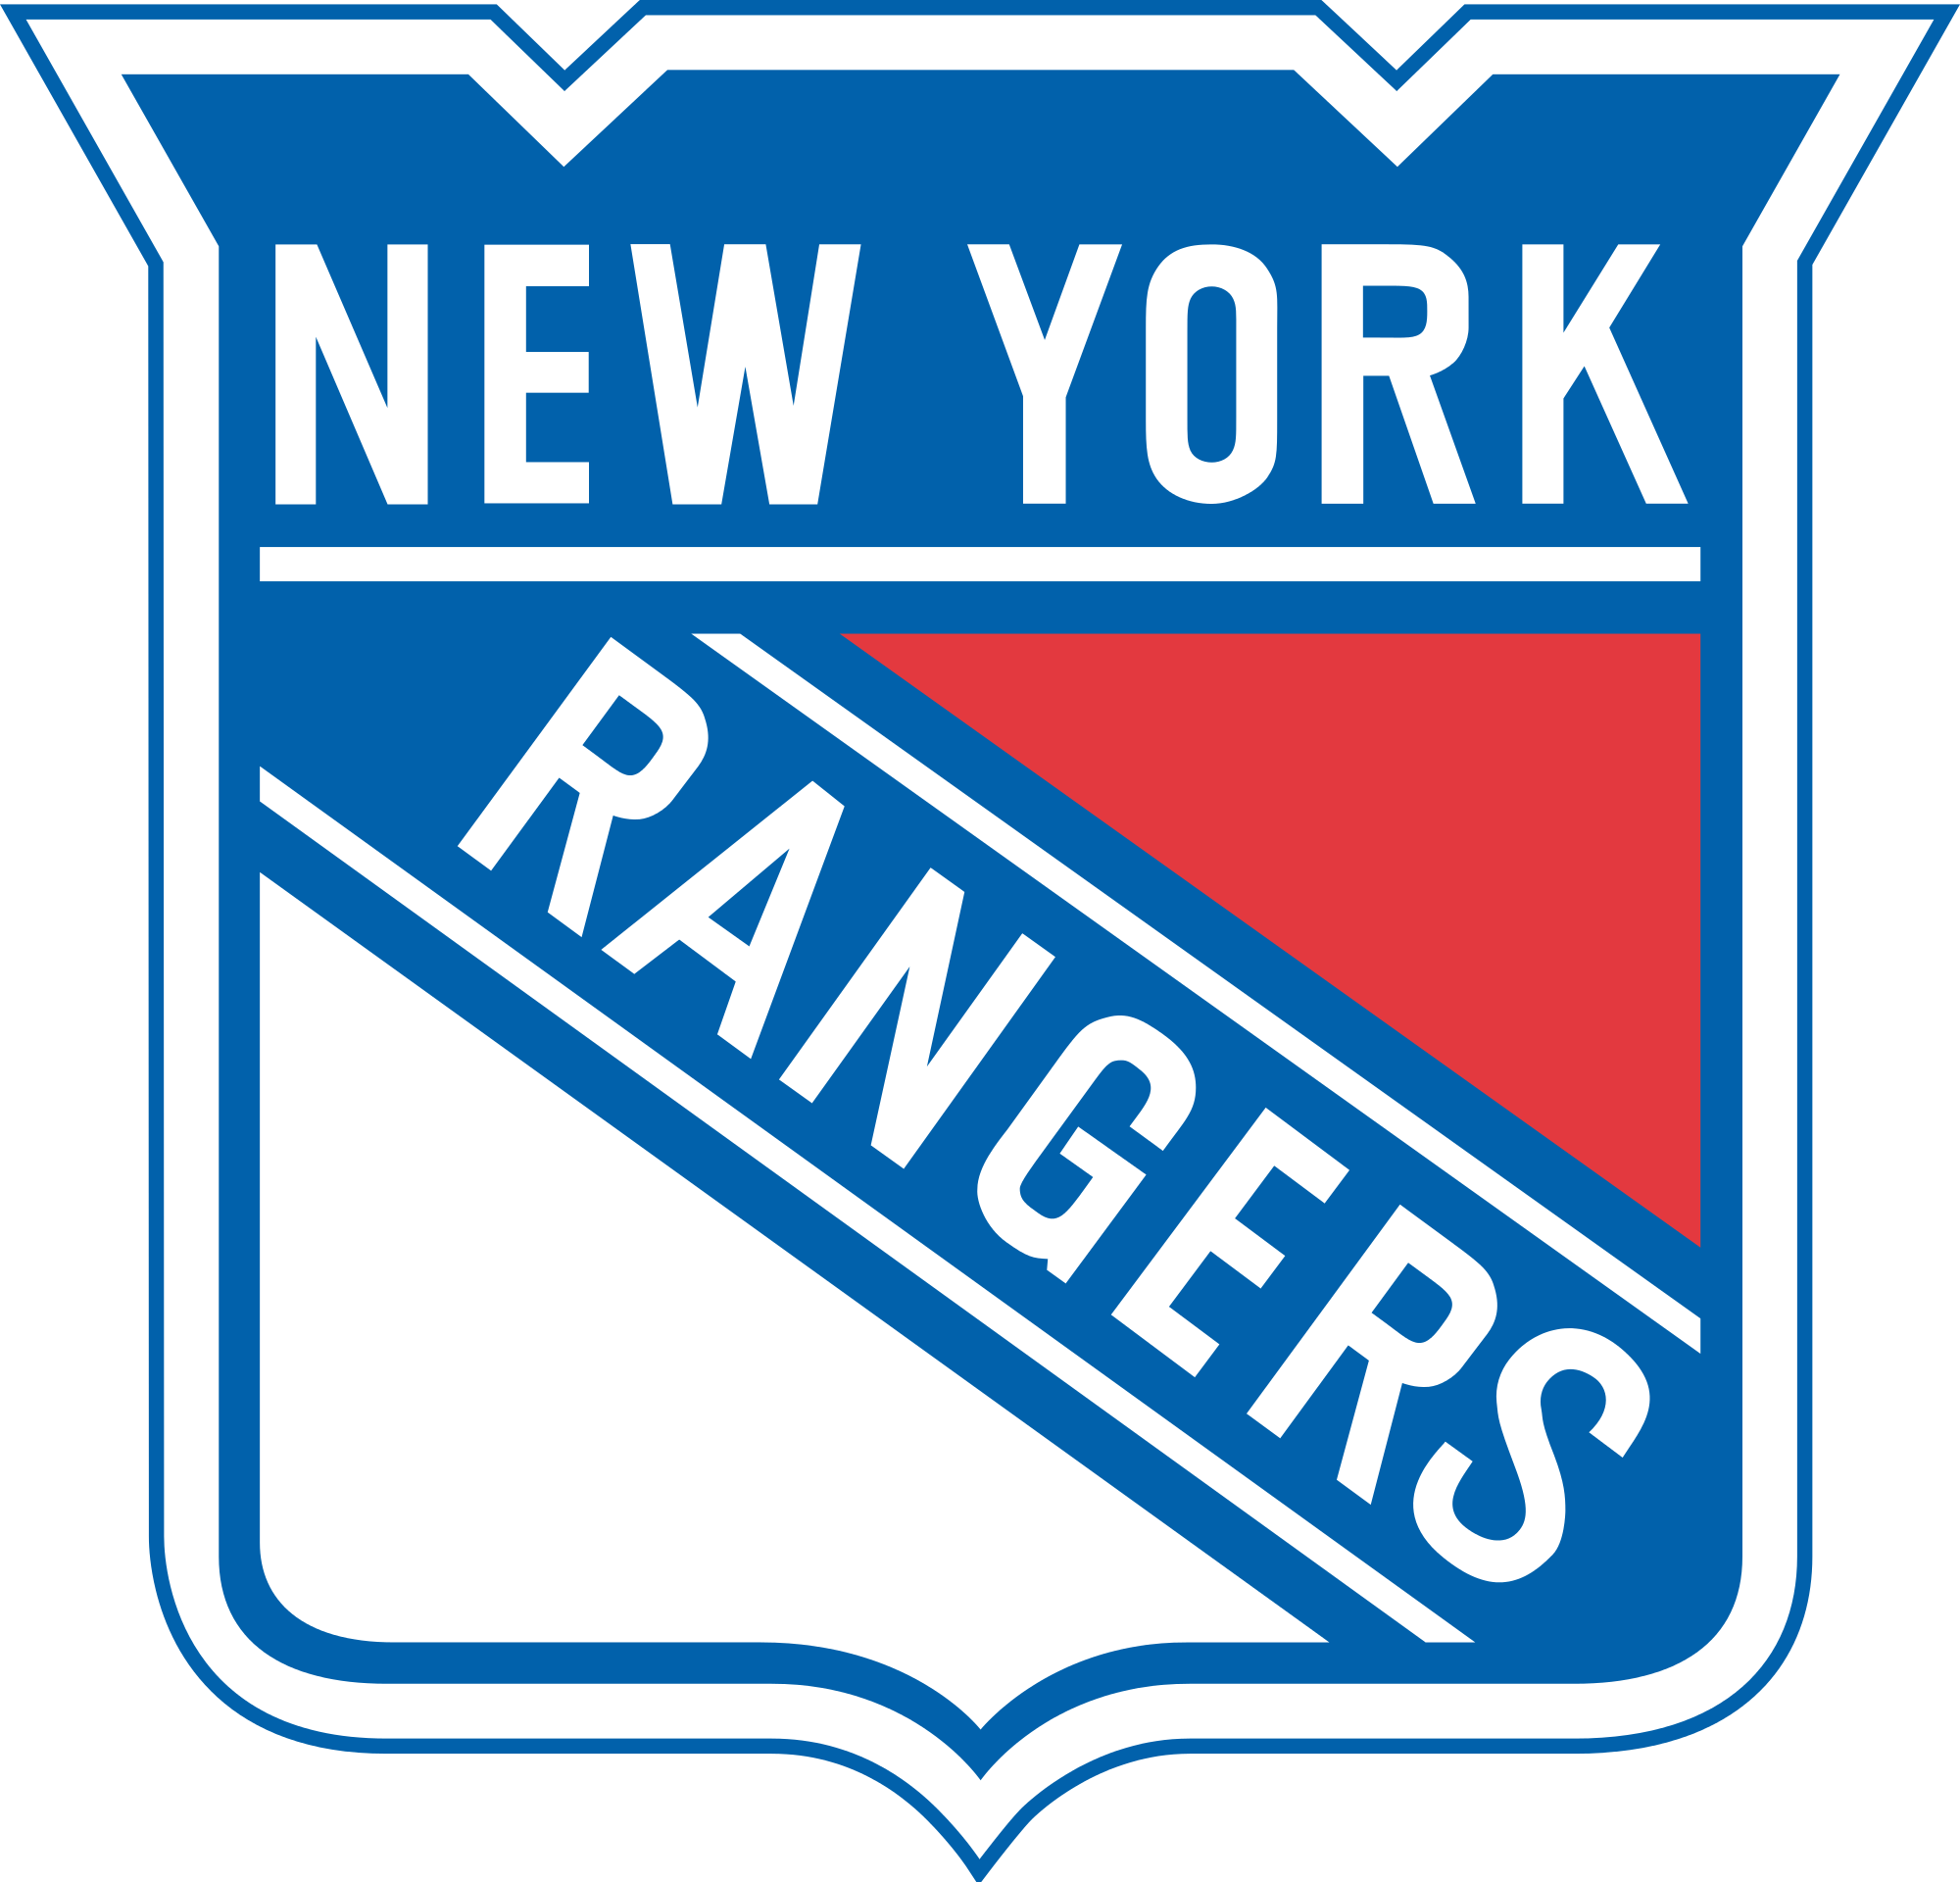 Wayne Gretzky New York Rangers Jersey Statue of Liberty – Classic